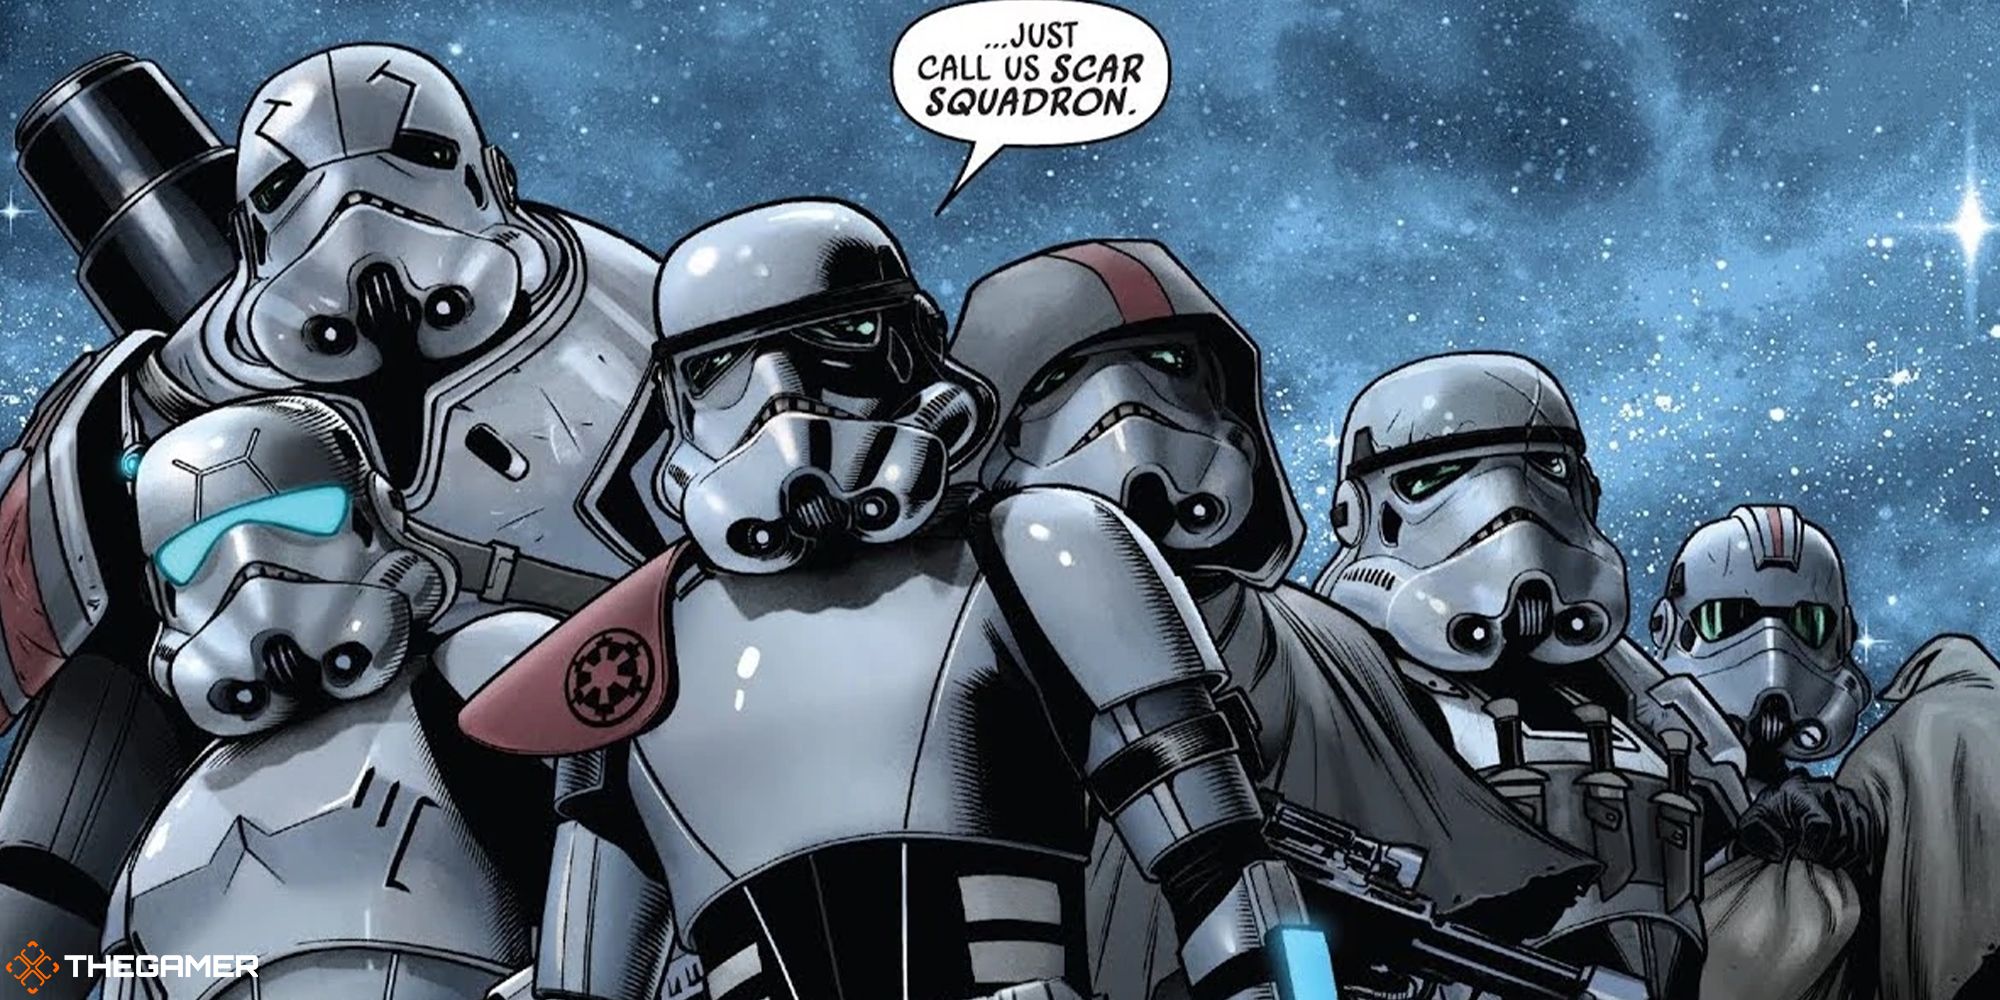 Star Wars comic (2015) - SCAR squad